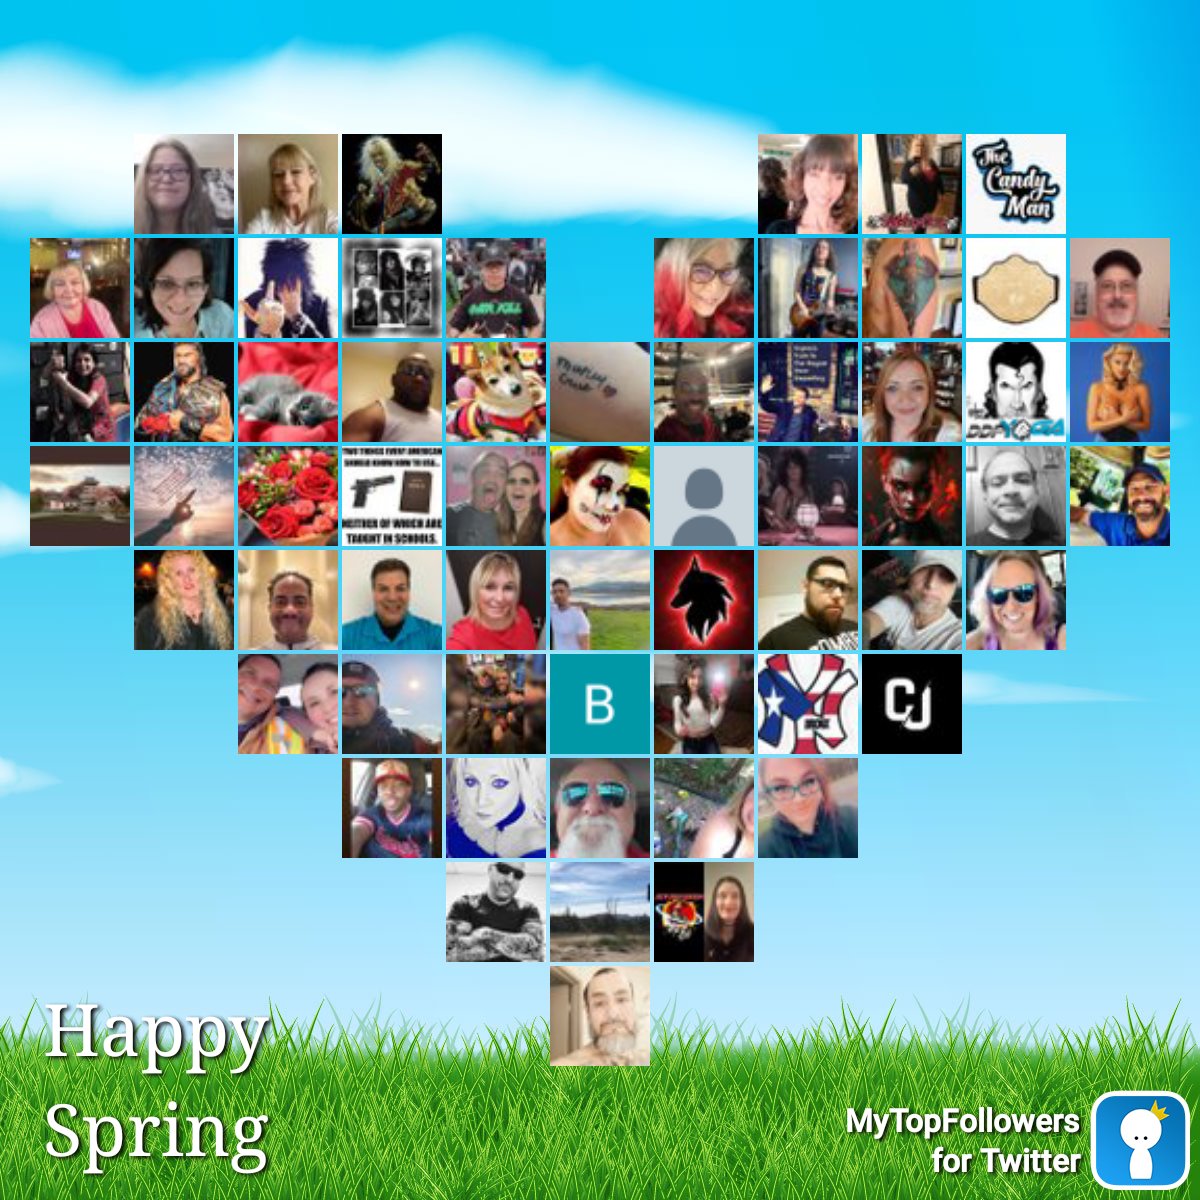 My top amazing fans #mytopfollowers #Spring via dixapp.com/mytopfollowers… Retweet if you see yourself @RuthlesWitz @CindyResister2 @Spartankingfro1 @Rebecca84610720 @TaraNicole707 @CandyMan665 @DebbiBu04160774 @JamieG2019 @aa9I3SVxVxA3aZL @find...